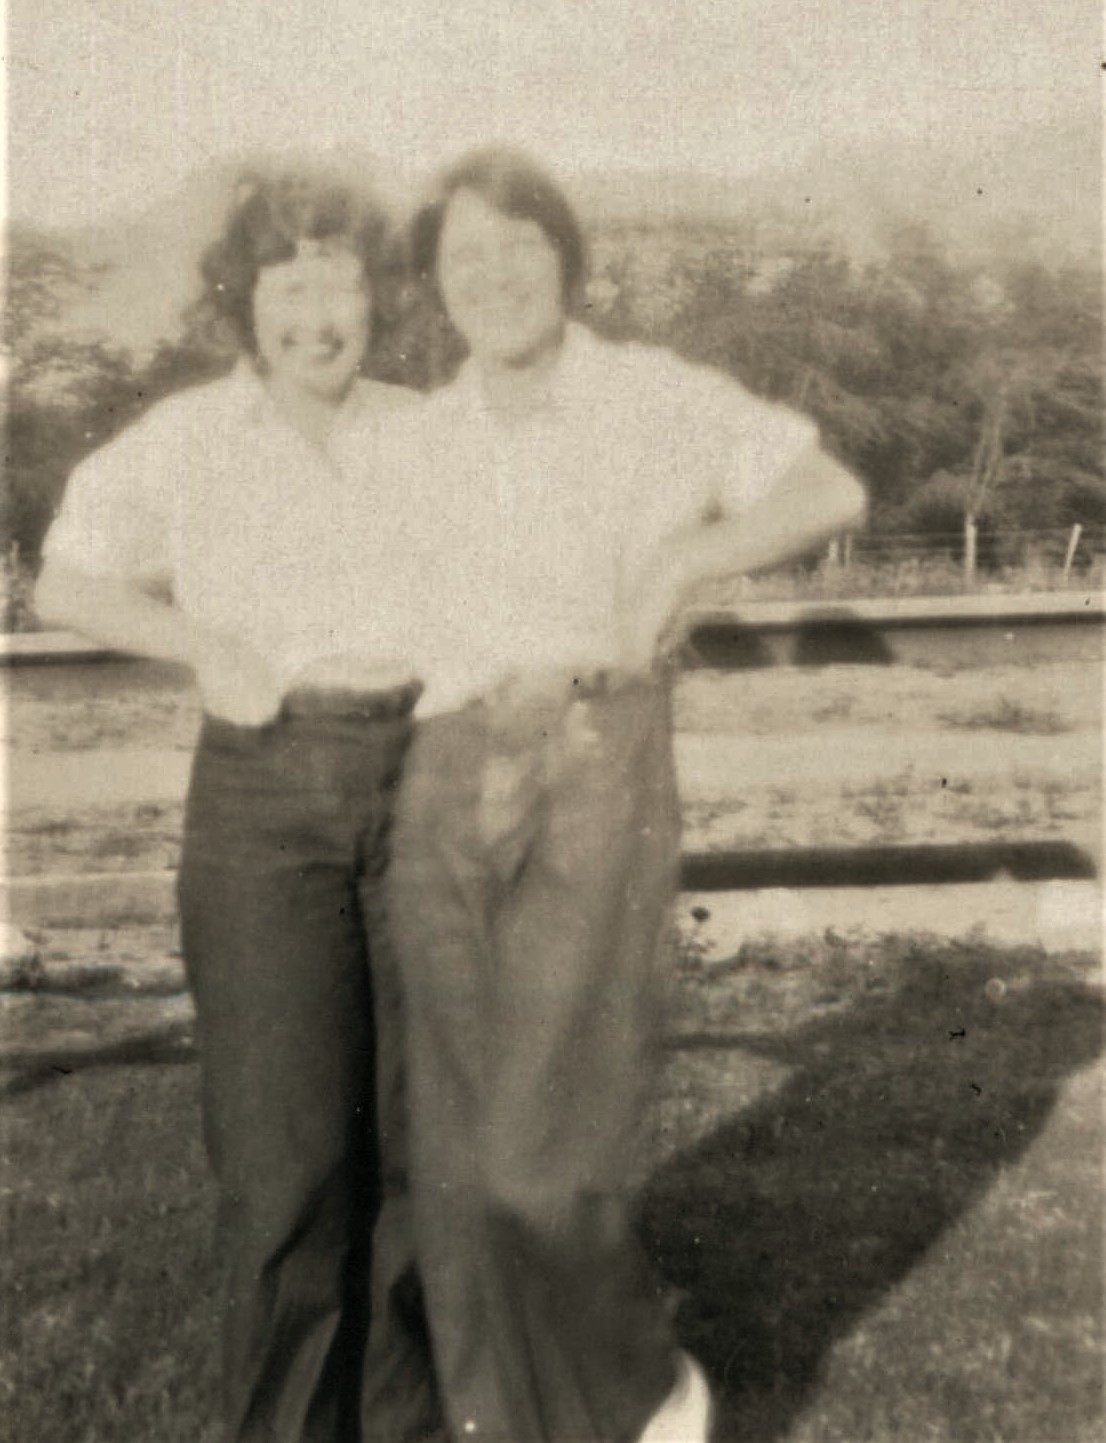 Sister Missionaries in Hawaii ca 1929-1930